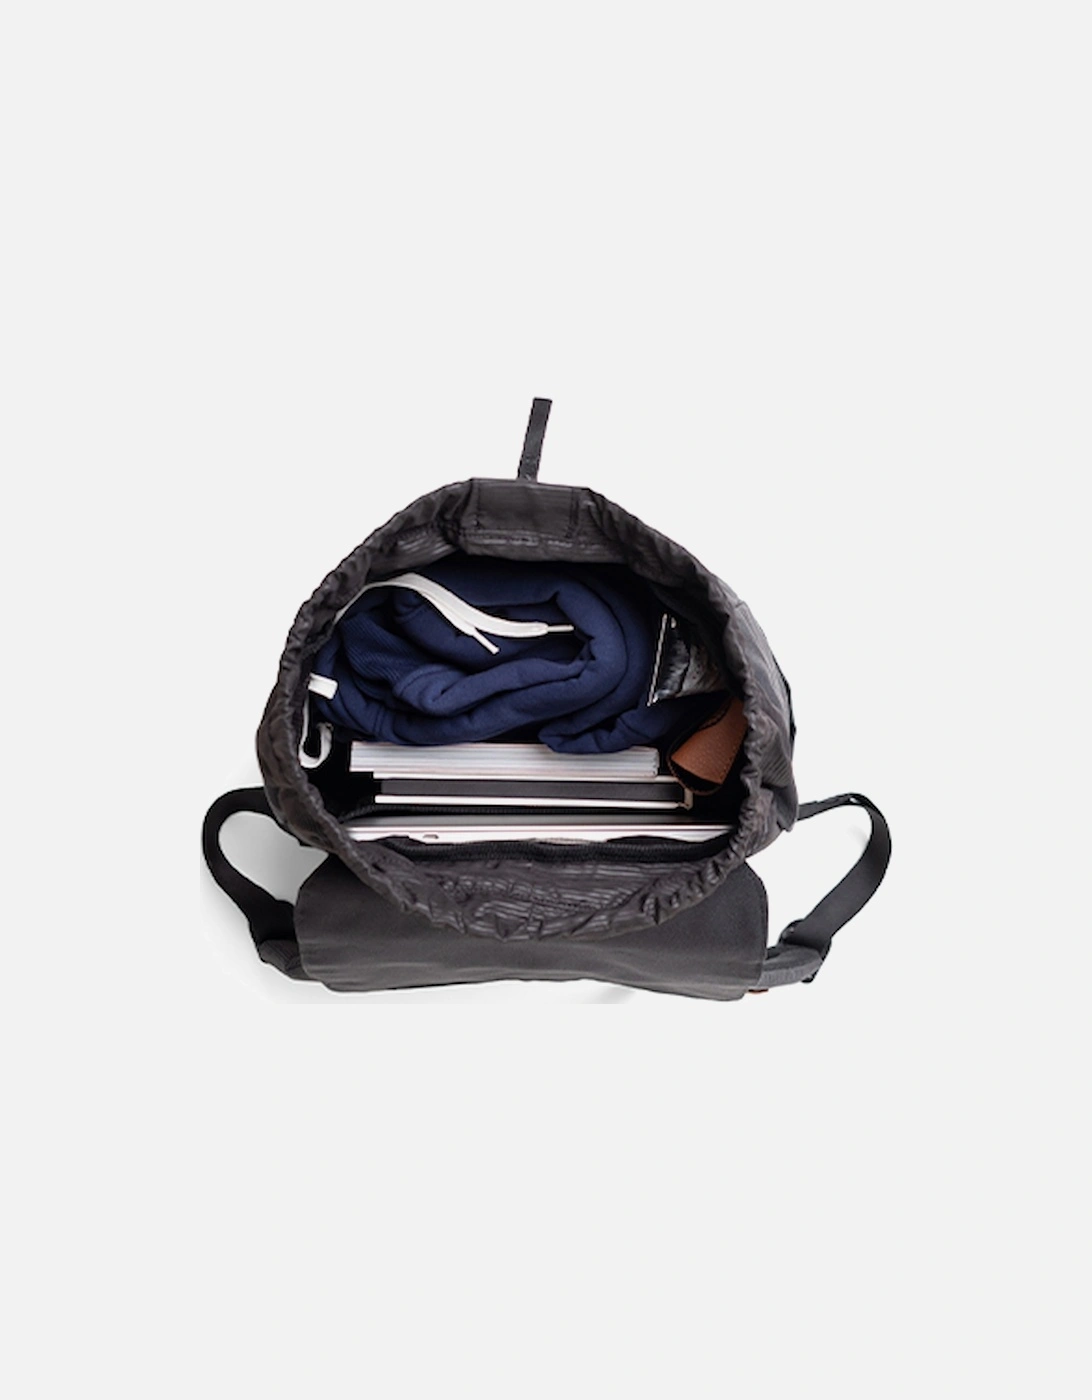 Retreat Small Backpack Black